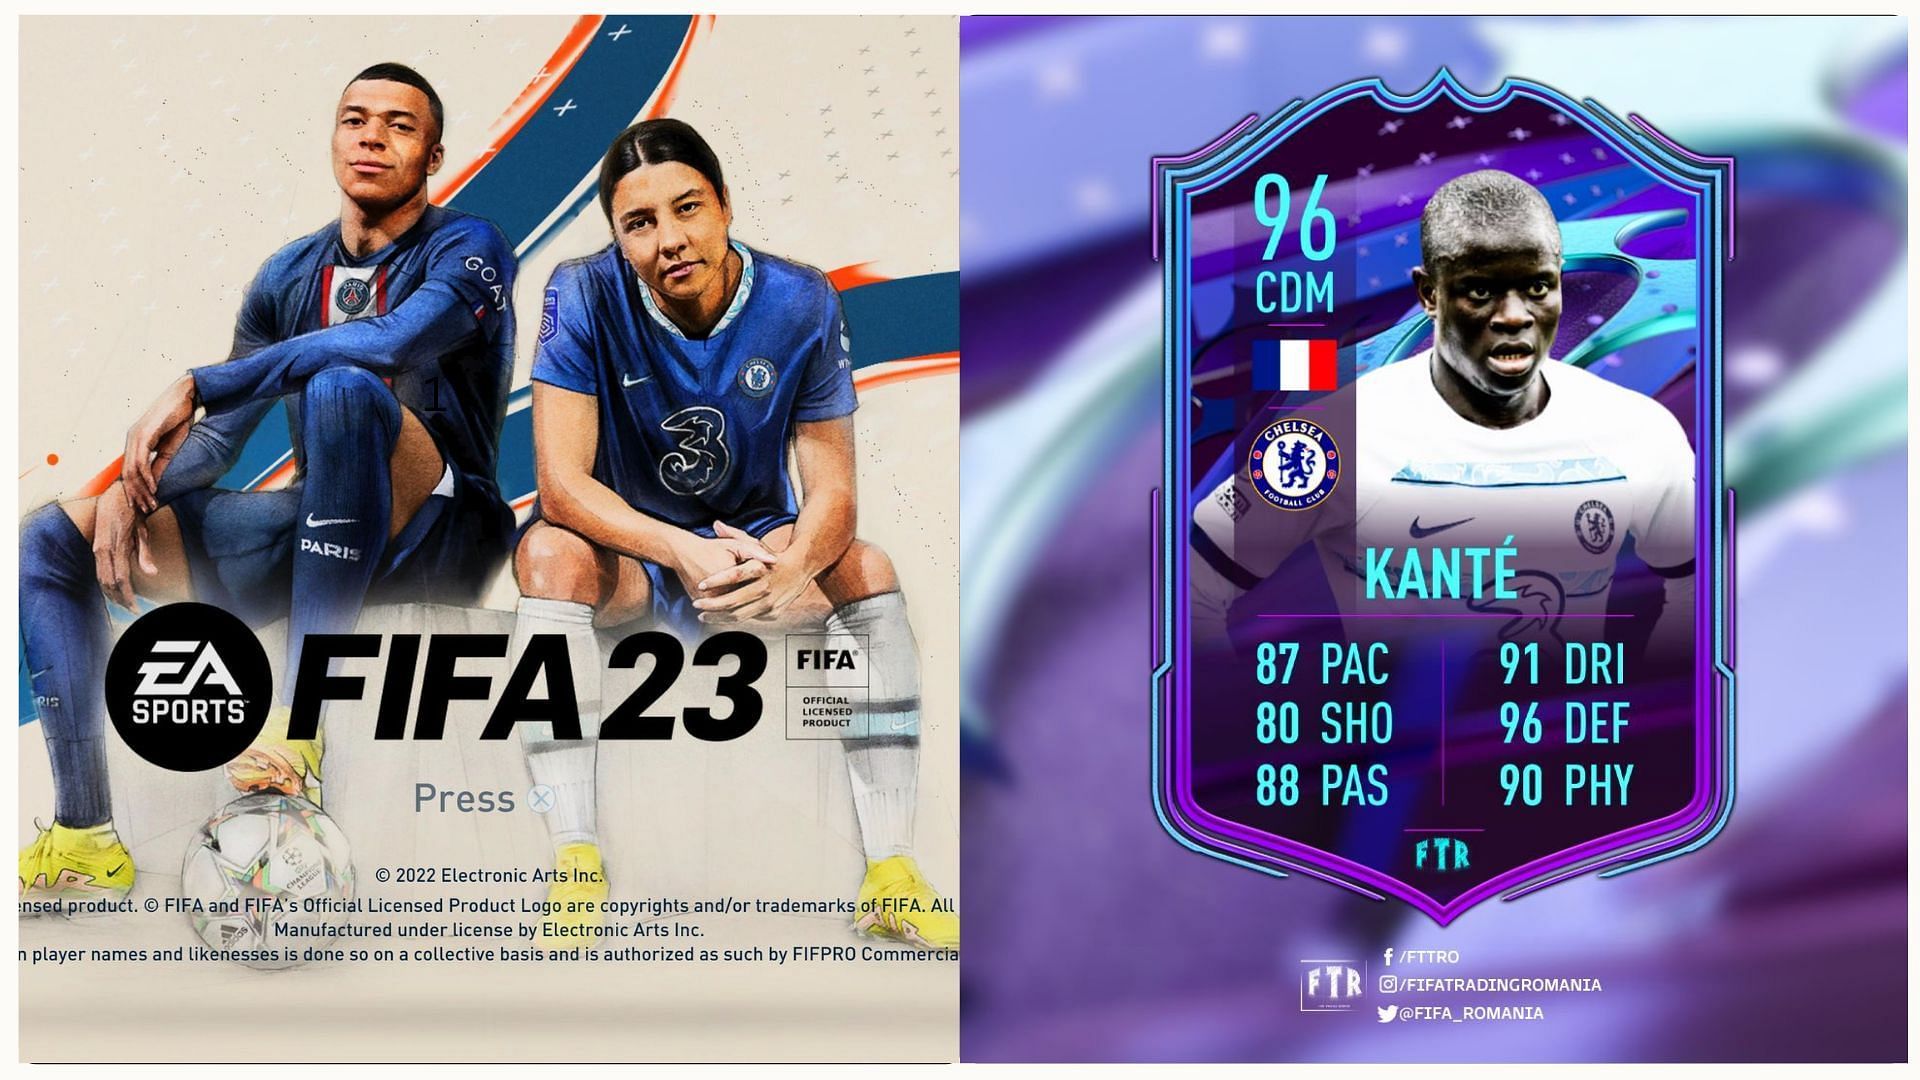 EA accidentally leak next FIFA 20 Ultimate Team Icon card - Dexerto